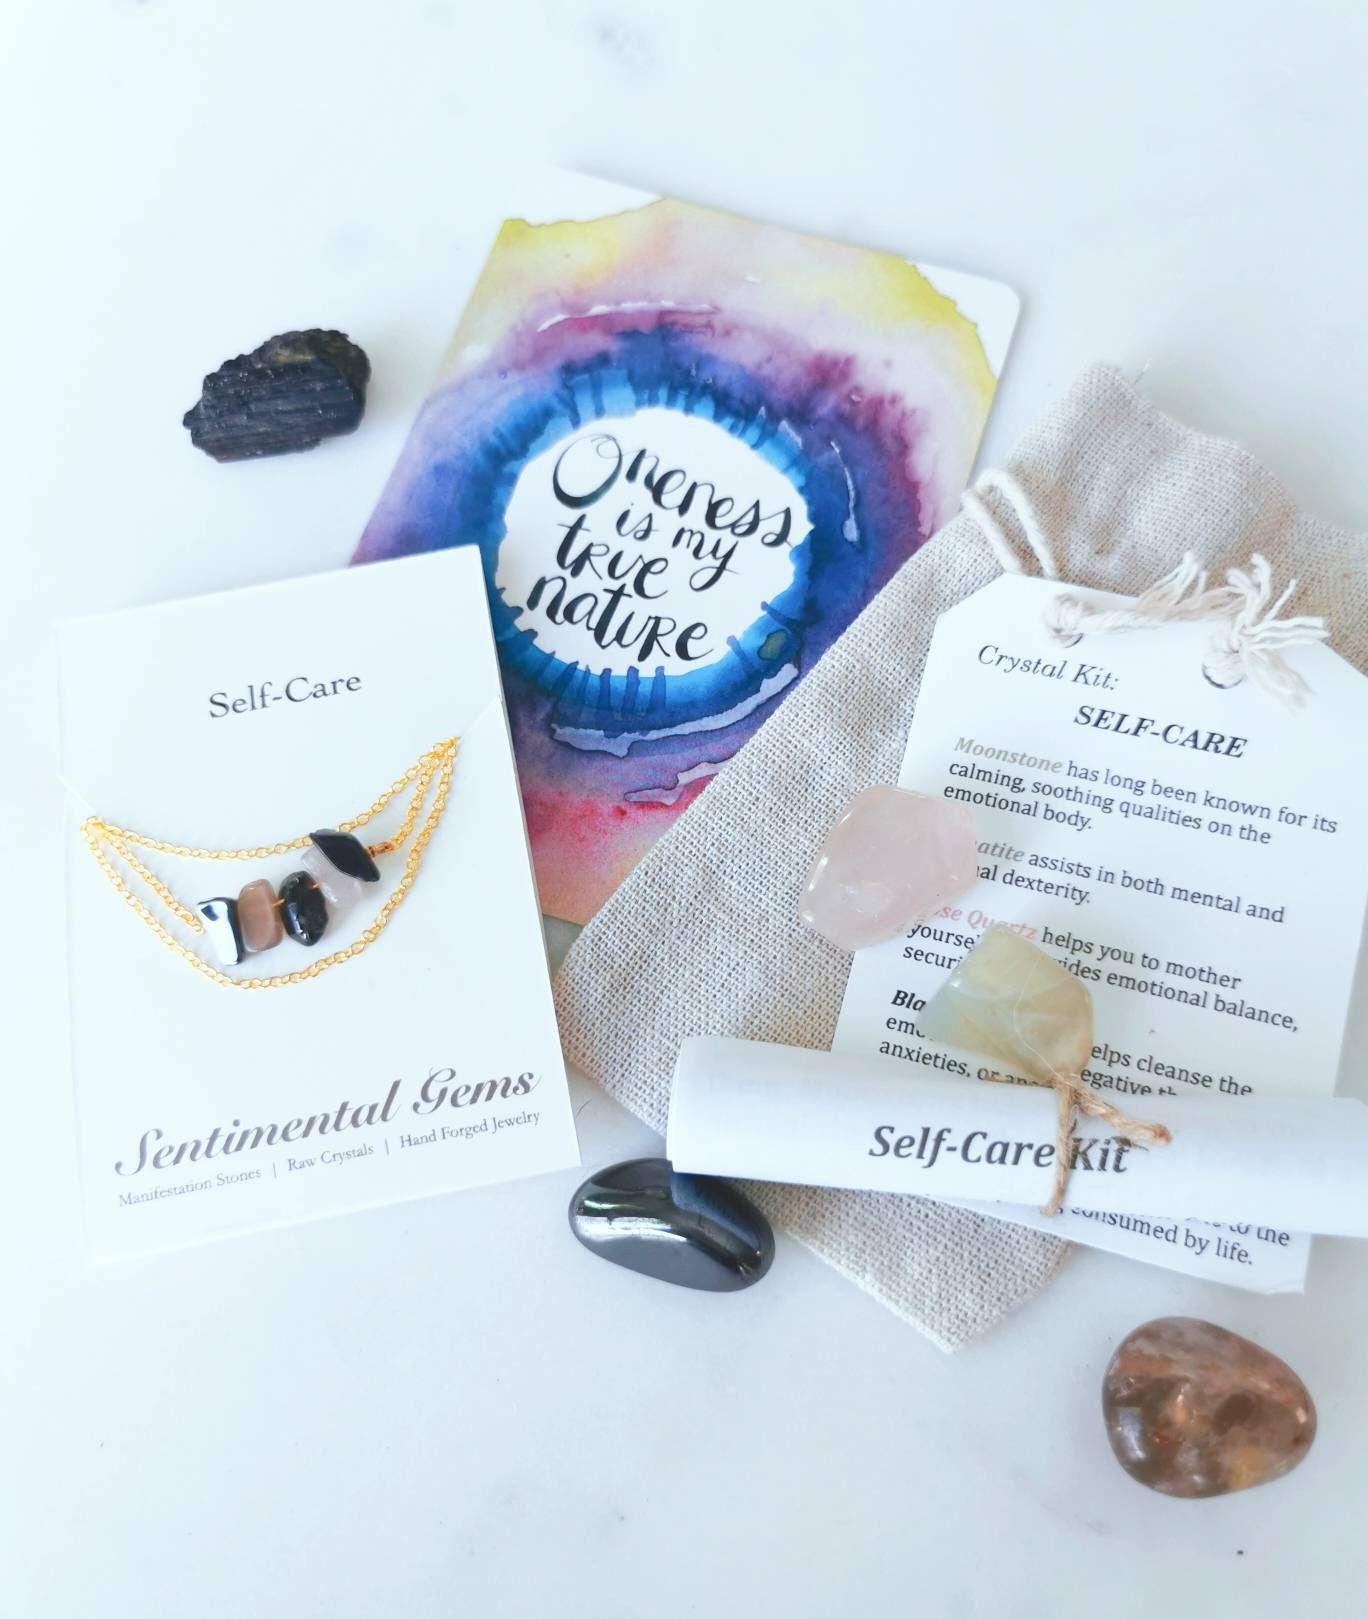 Sentimental Gems Self-Care Crystal Kit